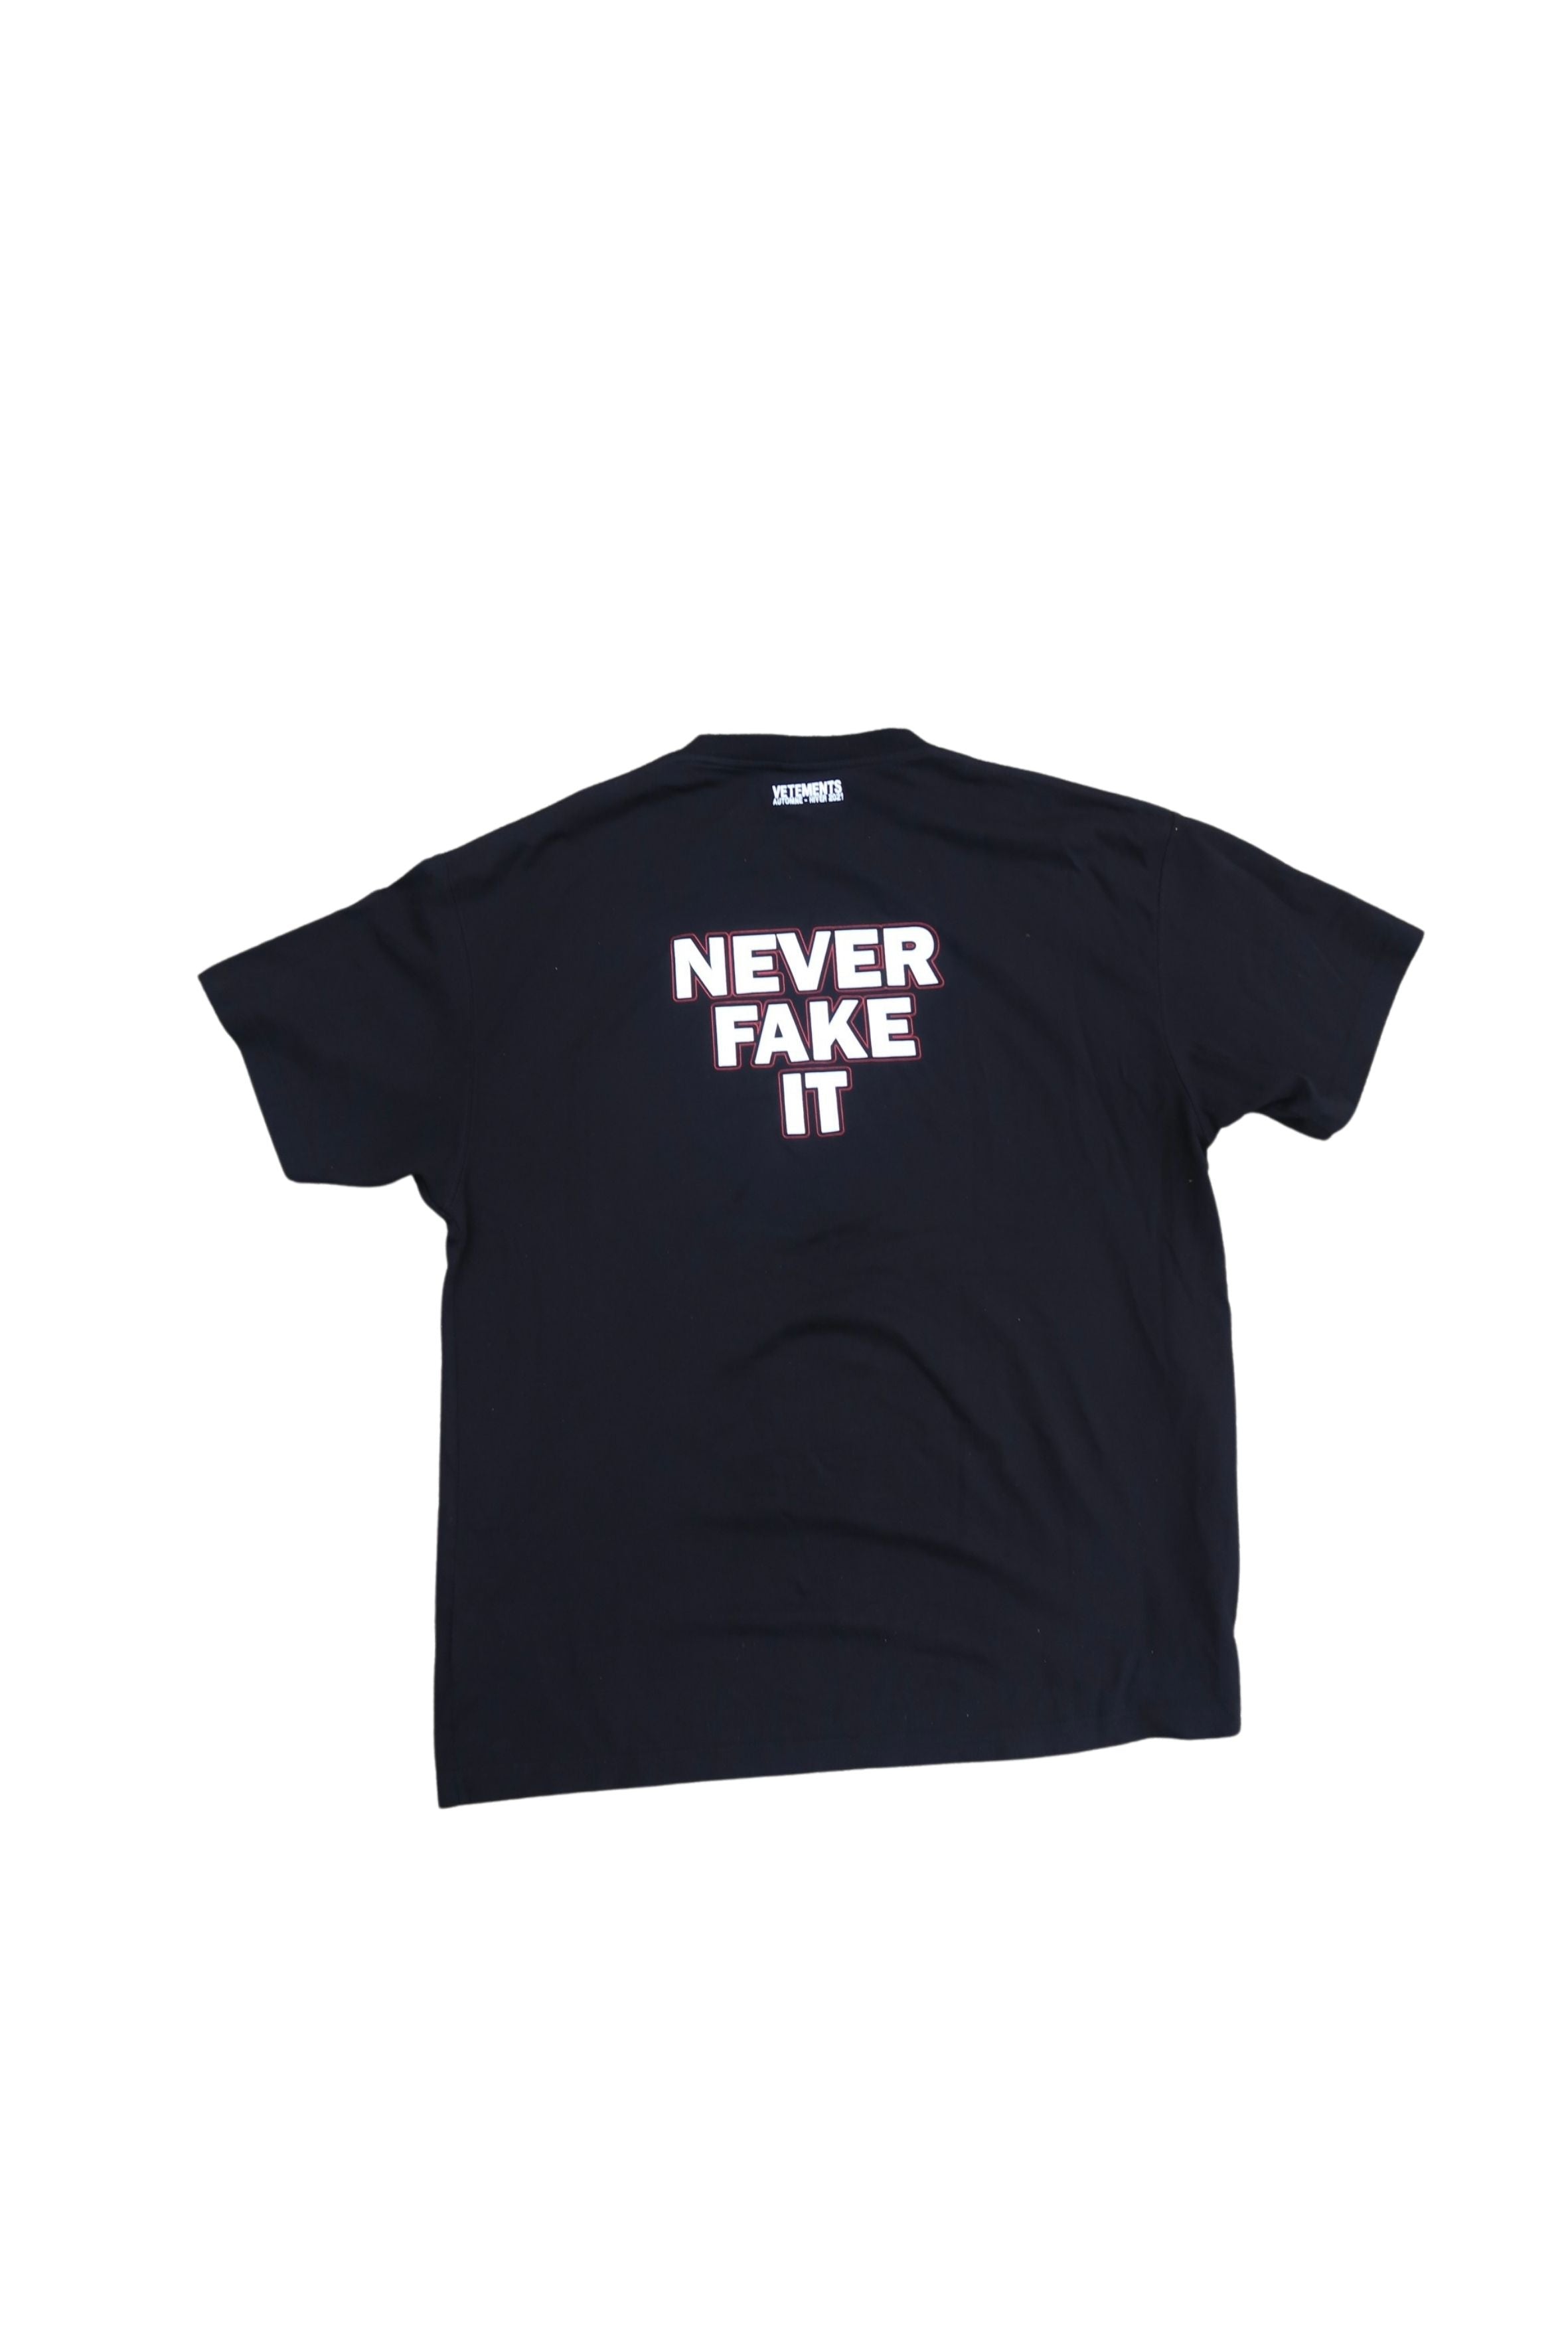 Vetements Never Fake It Tshirt (Fits L-XL)